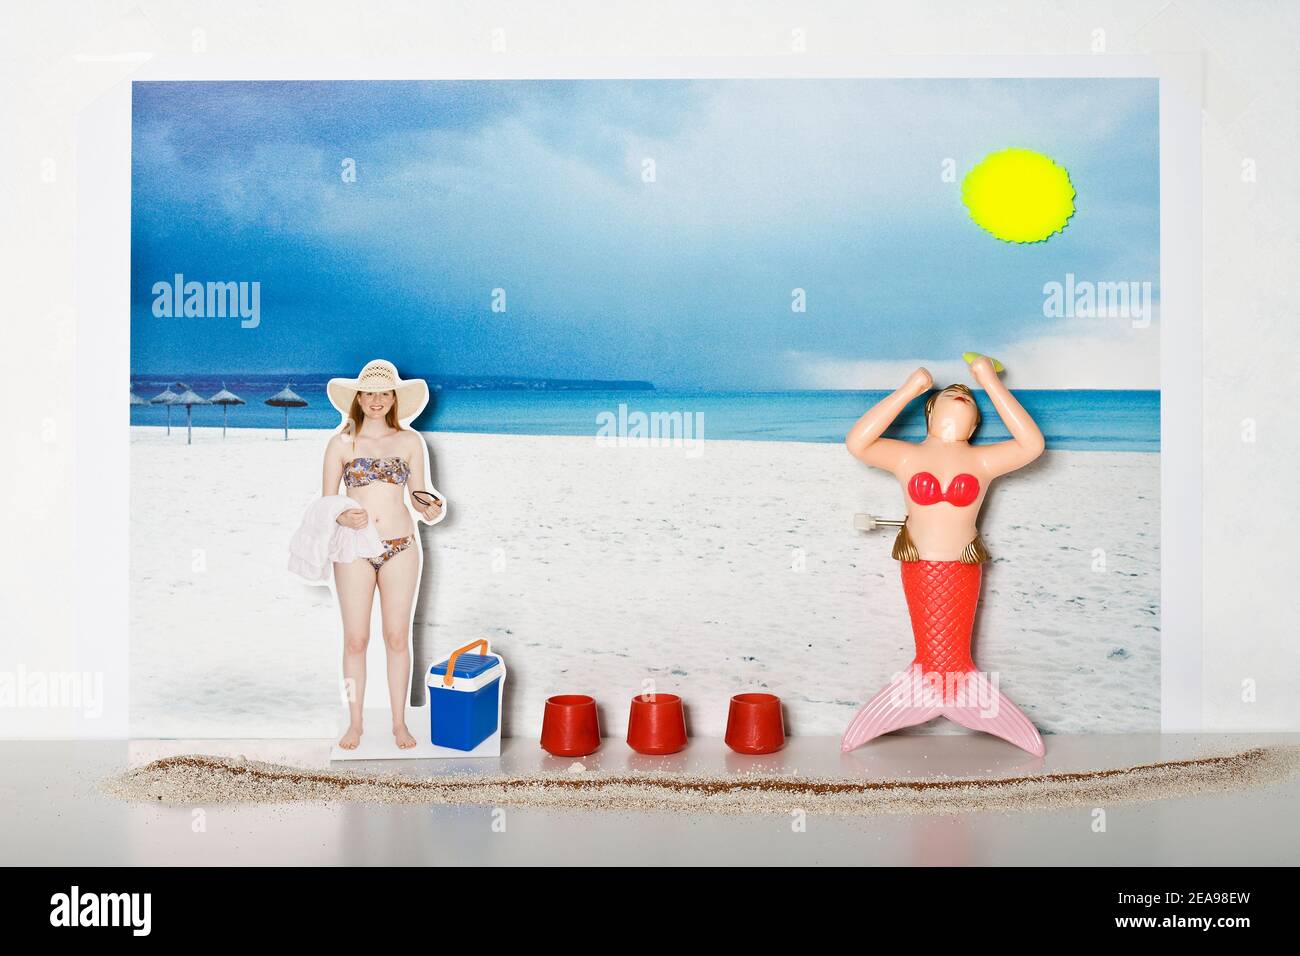 Playmobil figurine woman bikini swimsuit beach pool leisure city life 